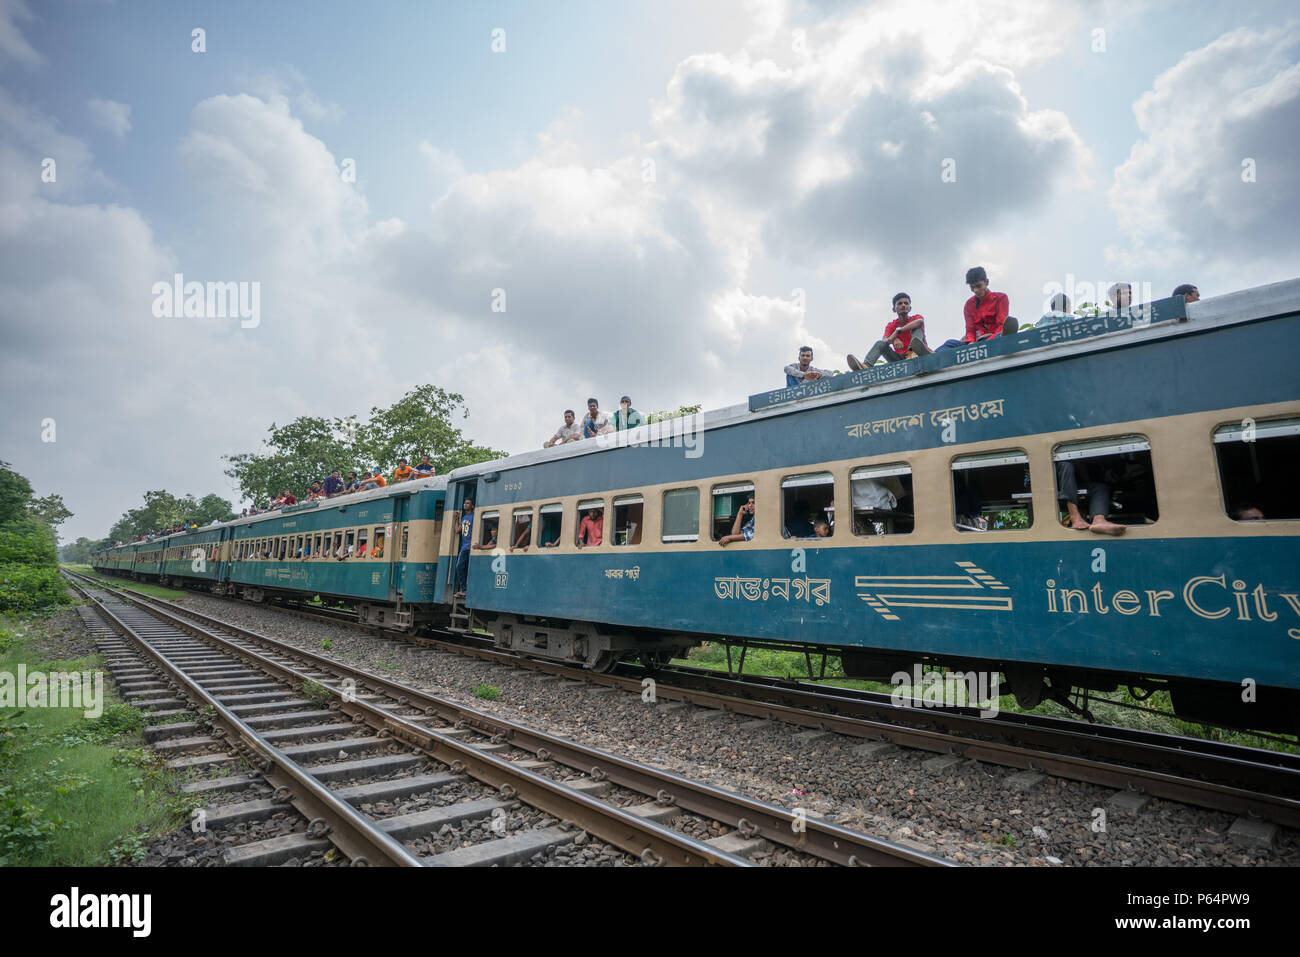 Passengers on top of a train in Dhaka, Bangladesh Stock Photo